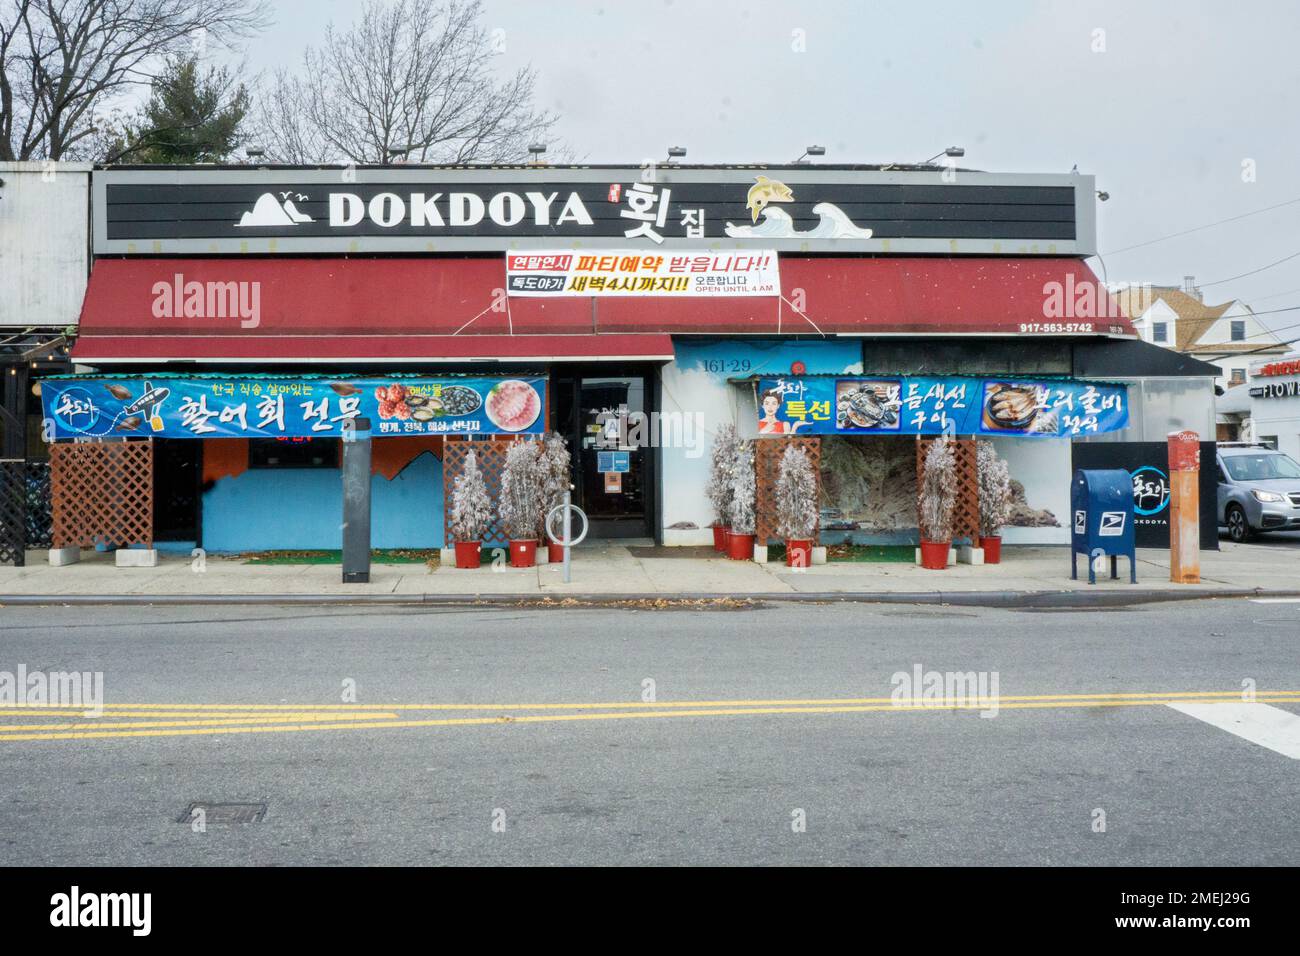 The exterior of Dokdoya, a Korean American restaurant & sushi bar on Crocheron Avenue in Flushing, Queens, New York. Stock Photo